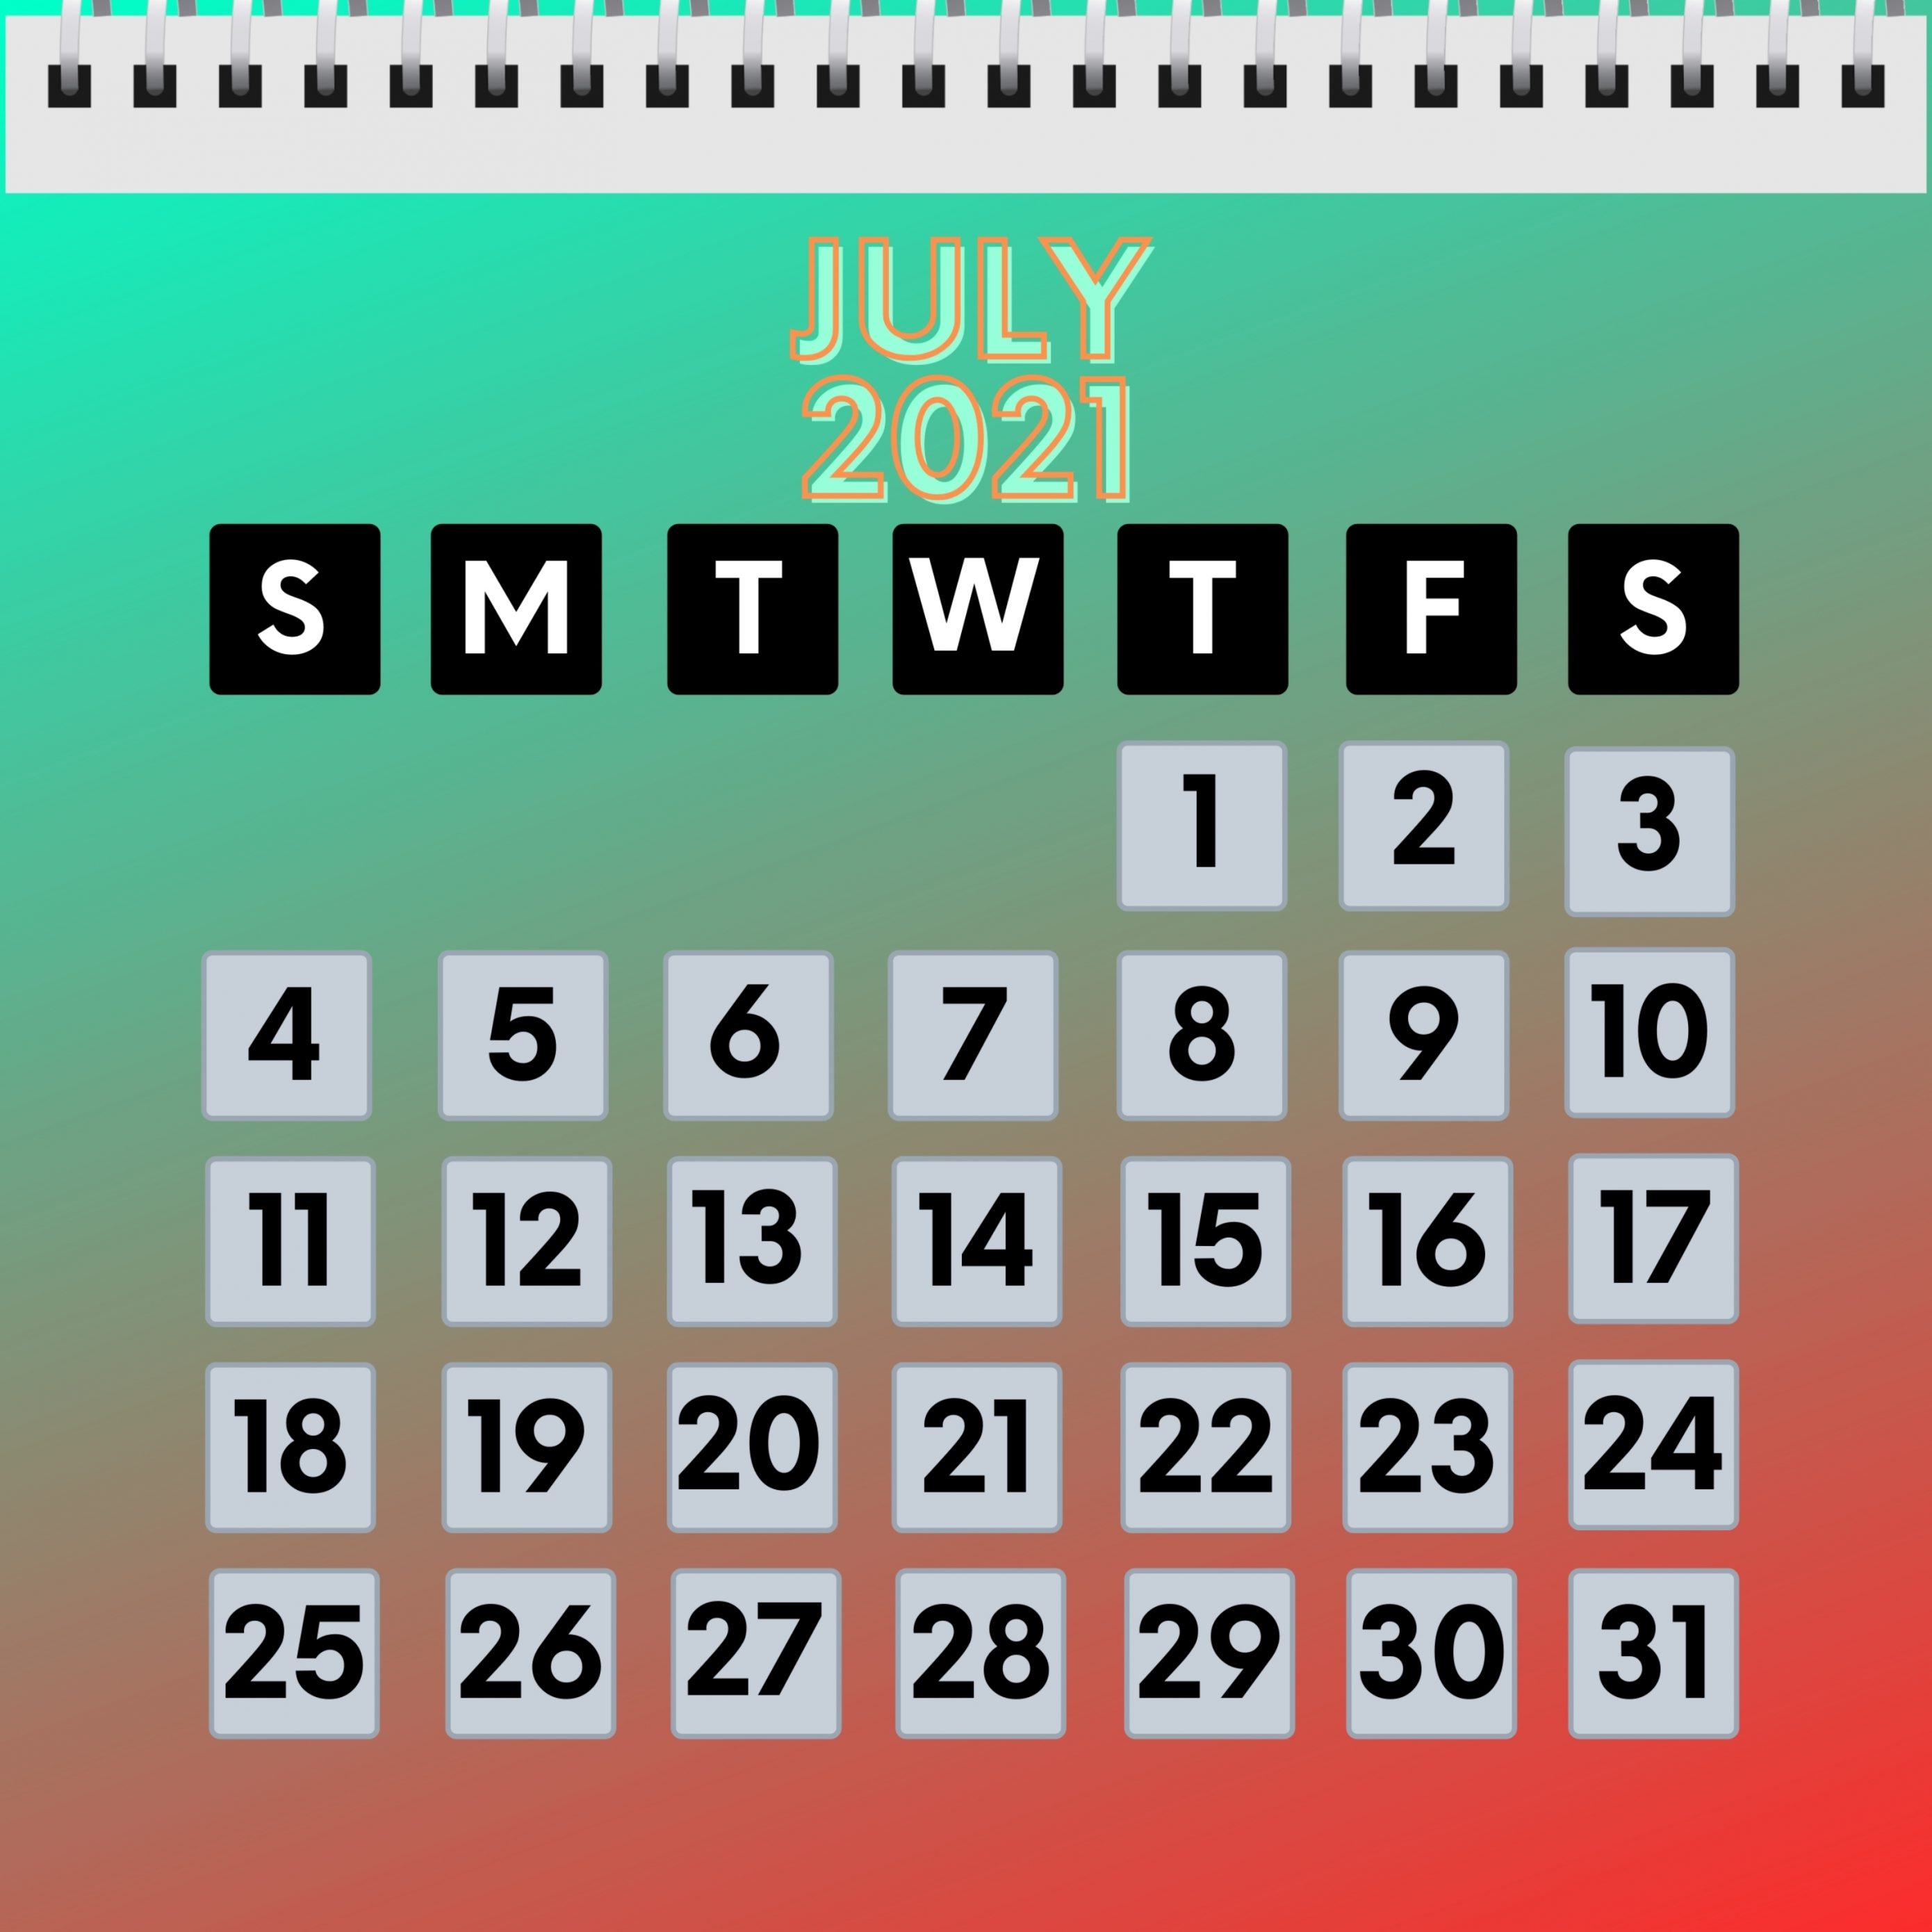 2780x2780 Parallax wallpaper 4k July 2021 Calendar iPad Wallpaper 2780x2780 pixels resolution